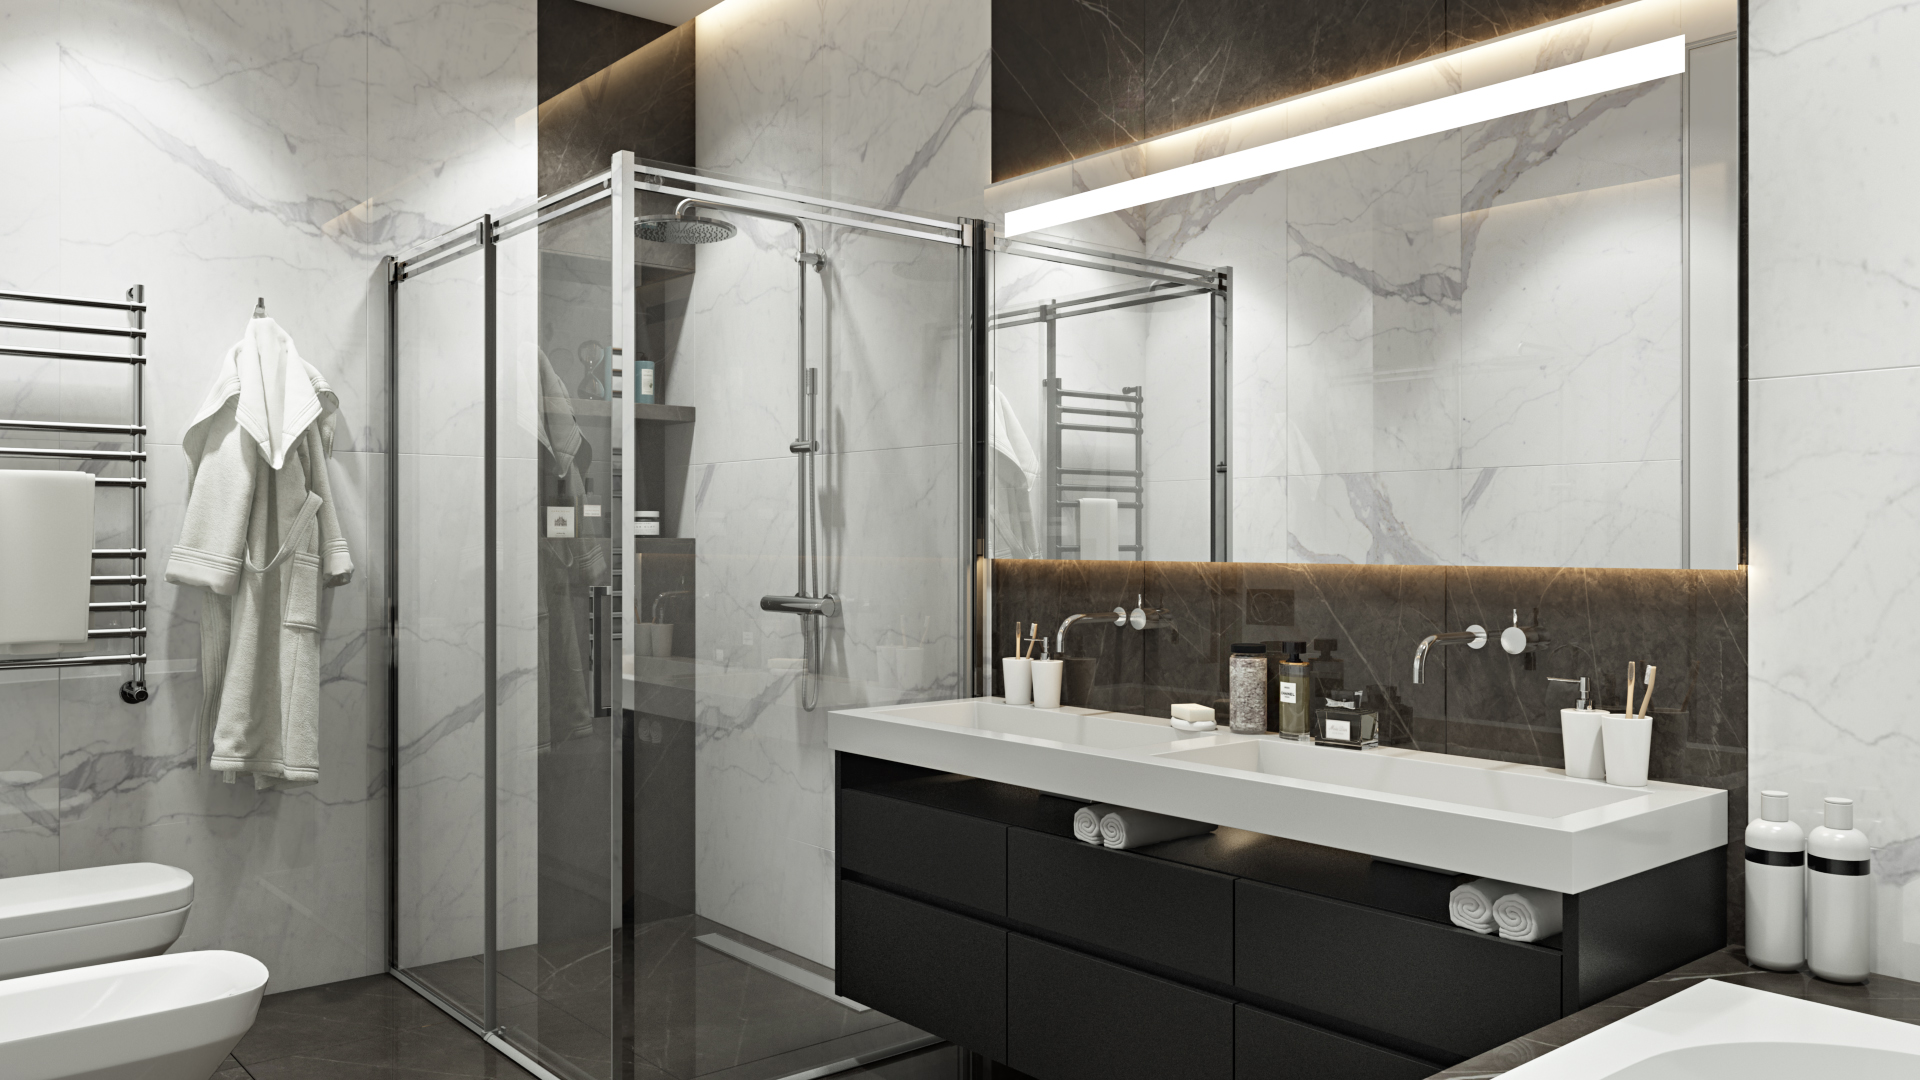 3D Render of a Beautiful Modern Bathroom